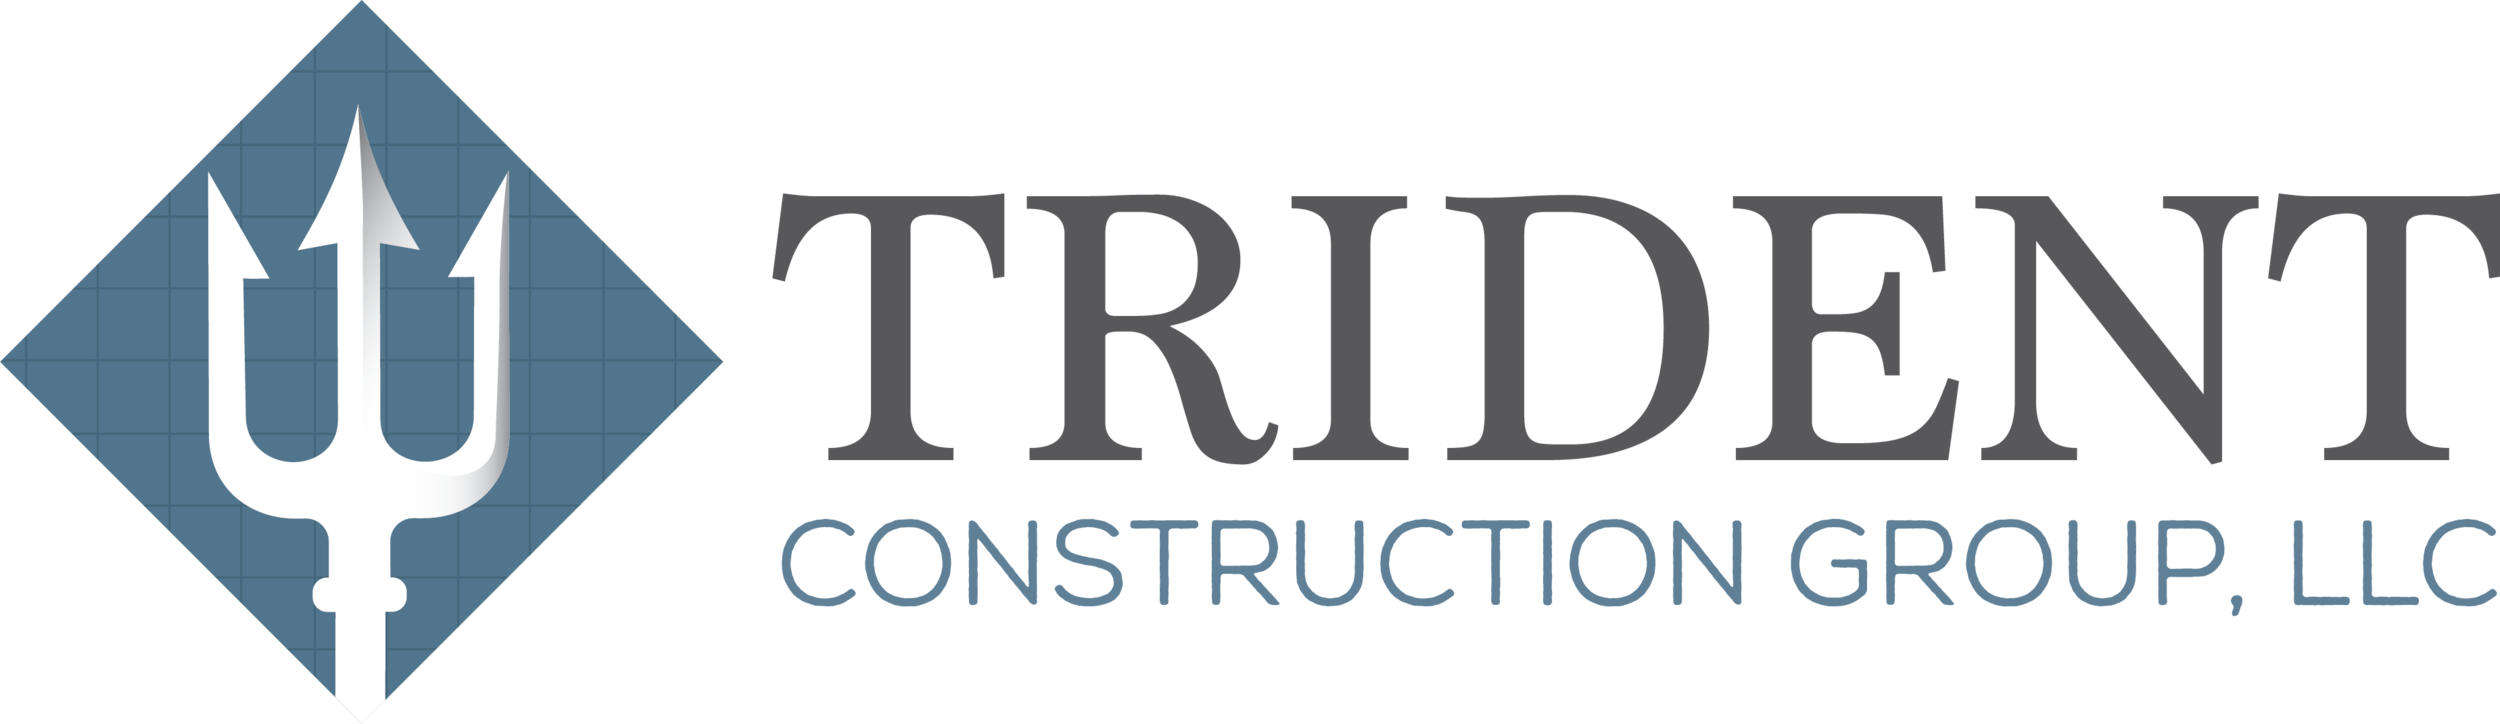 Trident Construction Group, LLC